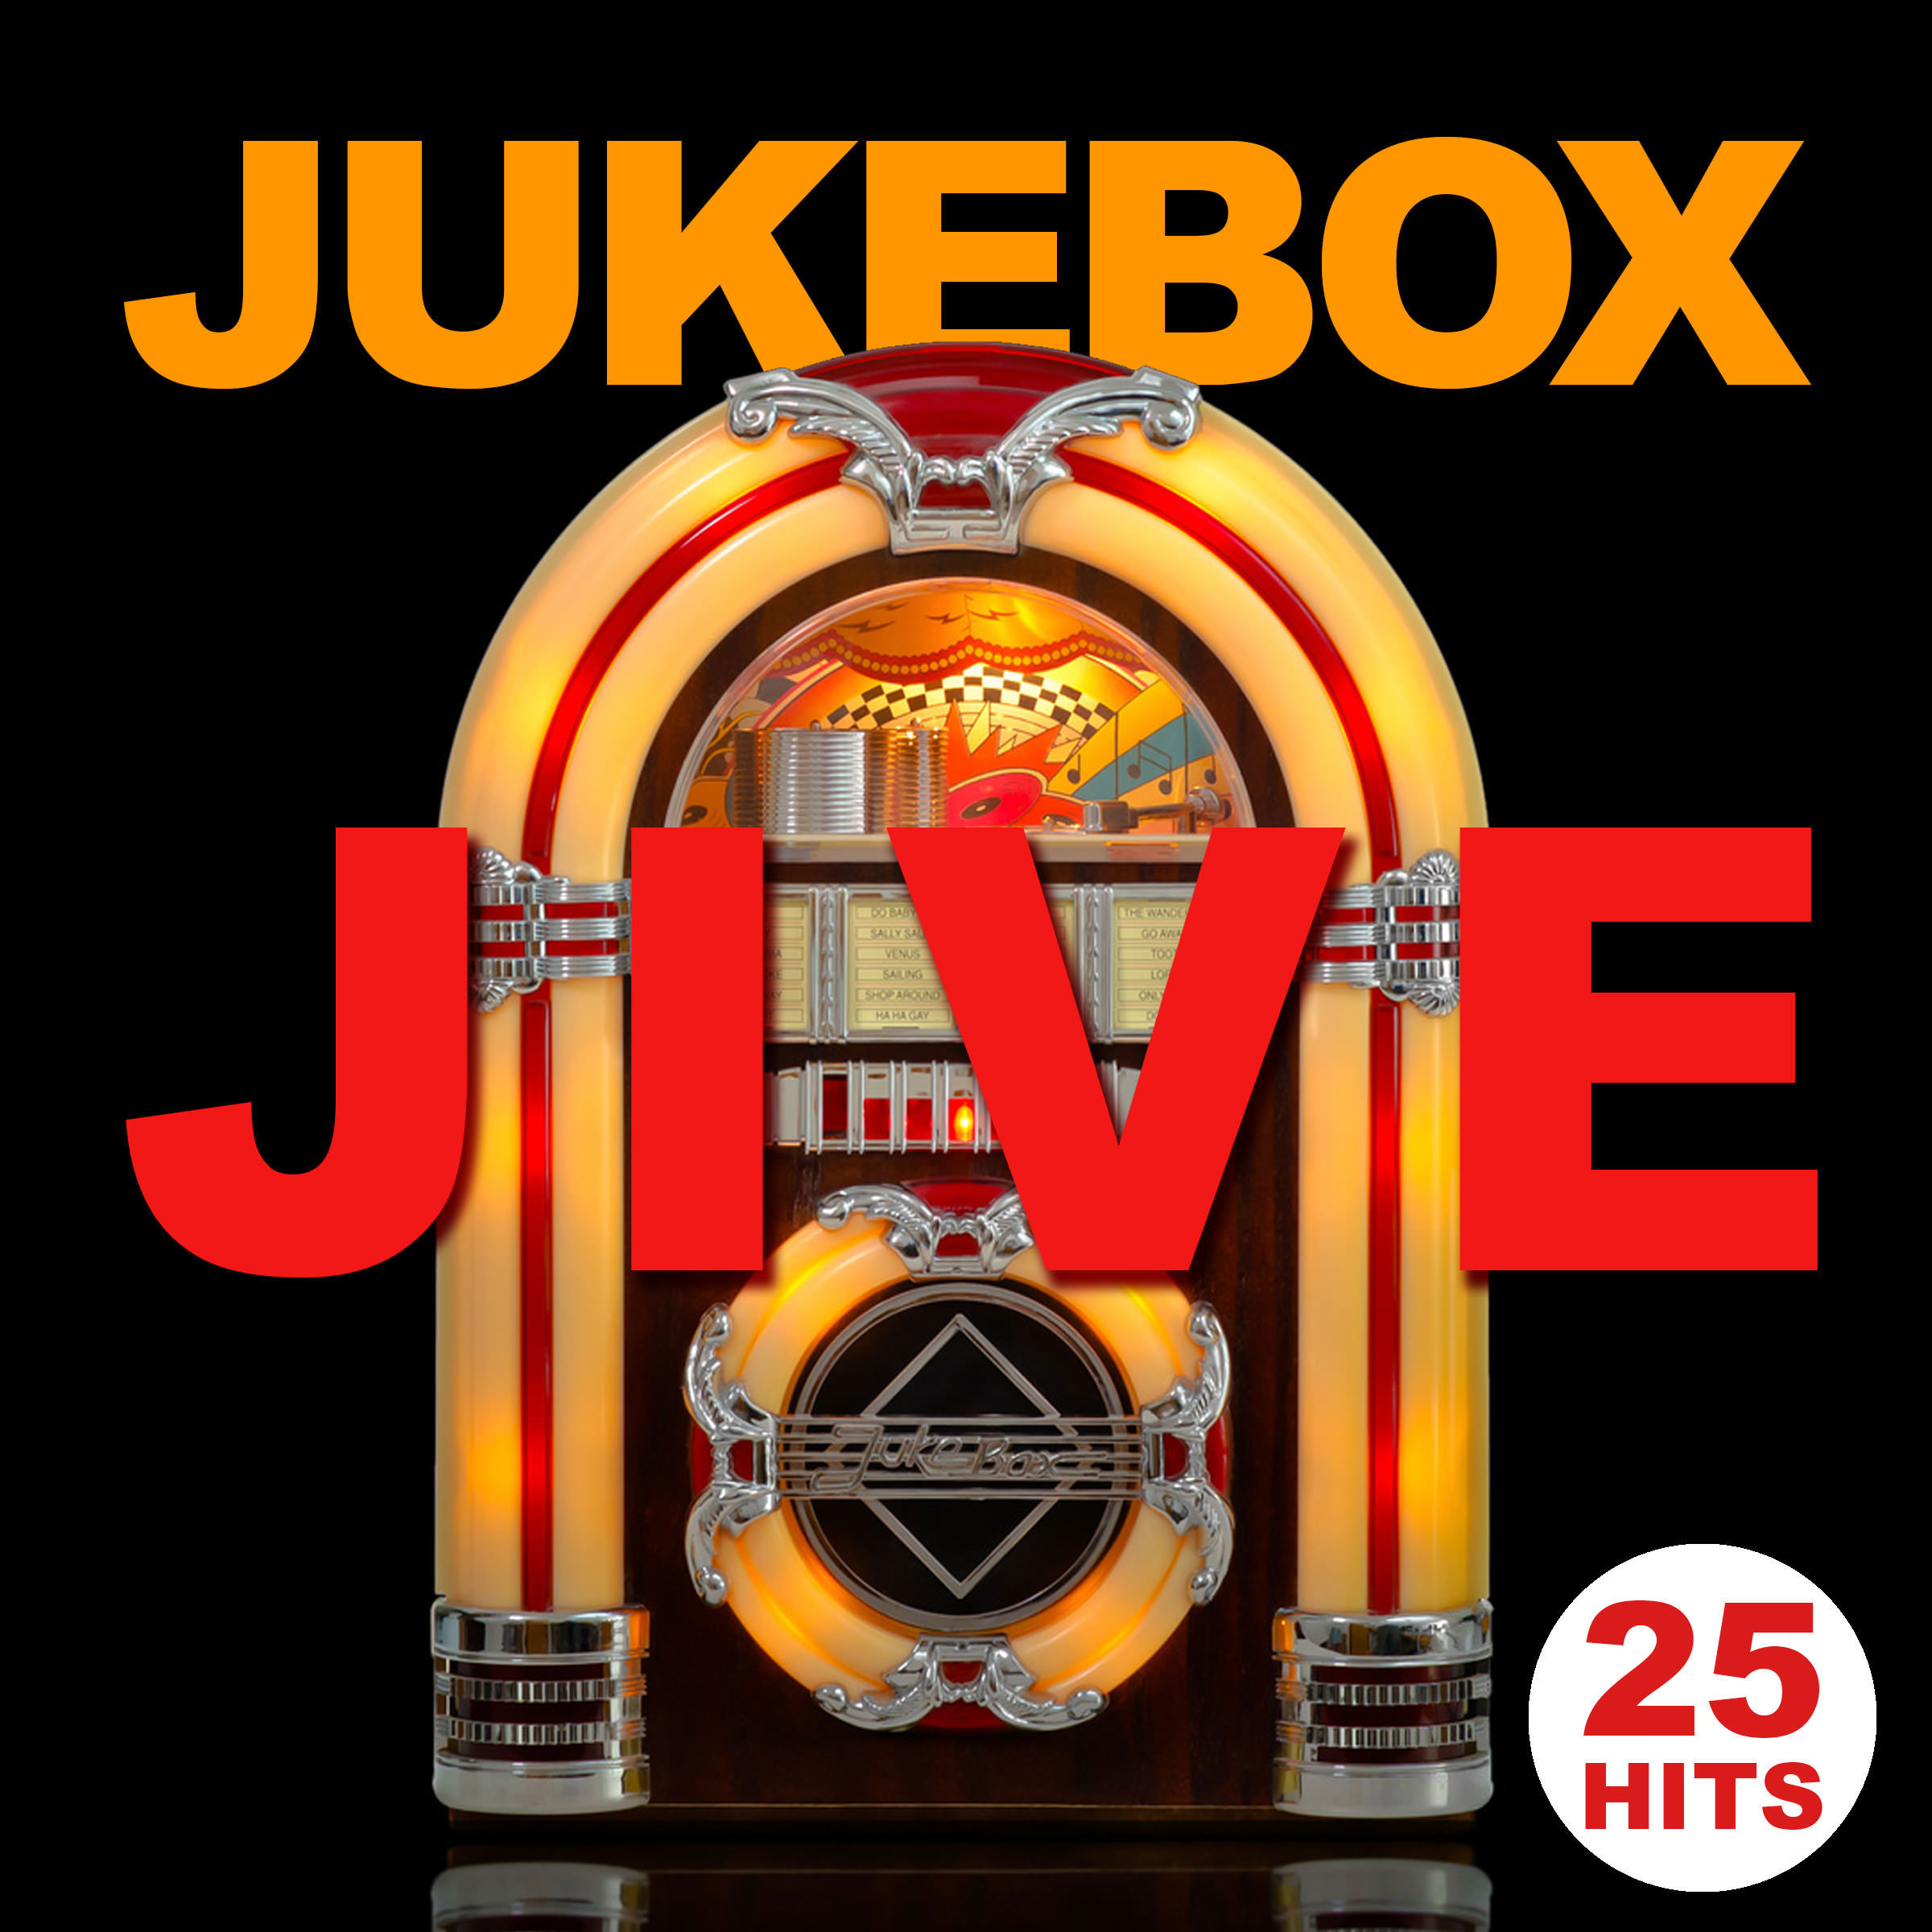 Jukebox Jive (DUPLICATE PRODUCT - DO NOT USE)